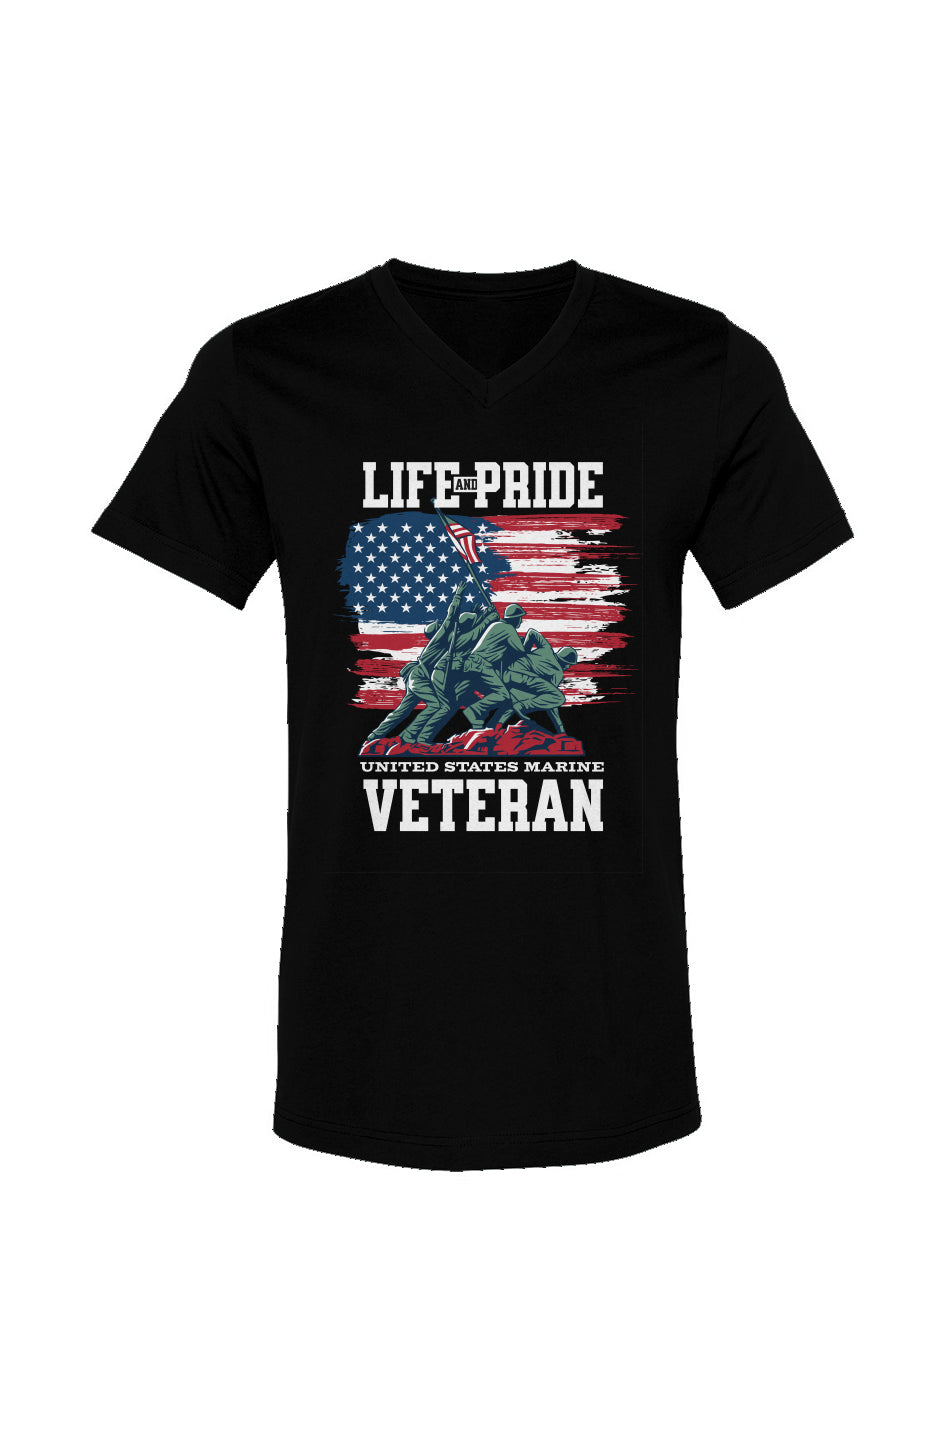 "Life And Pride United States Marine Veteran" Unisex Fit 